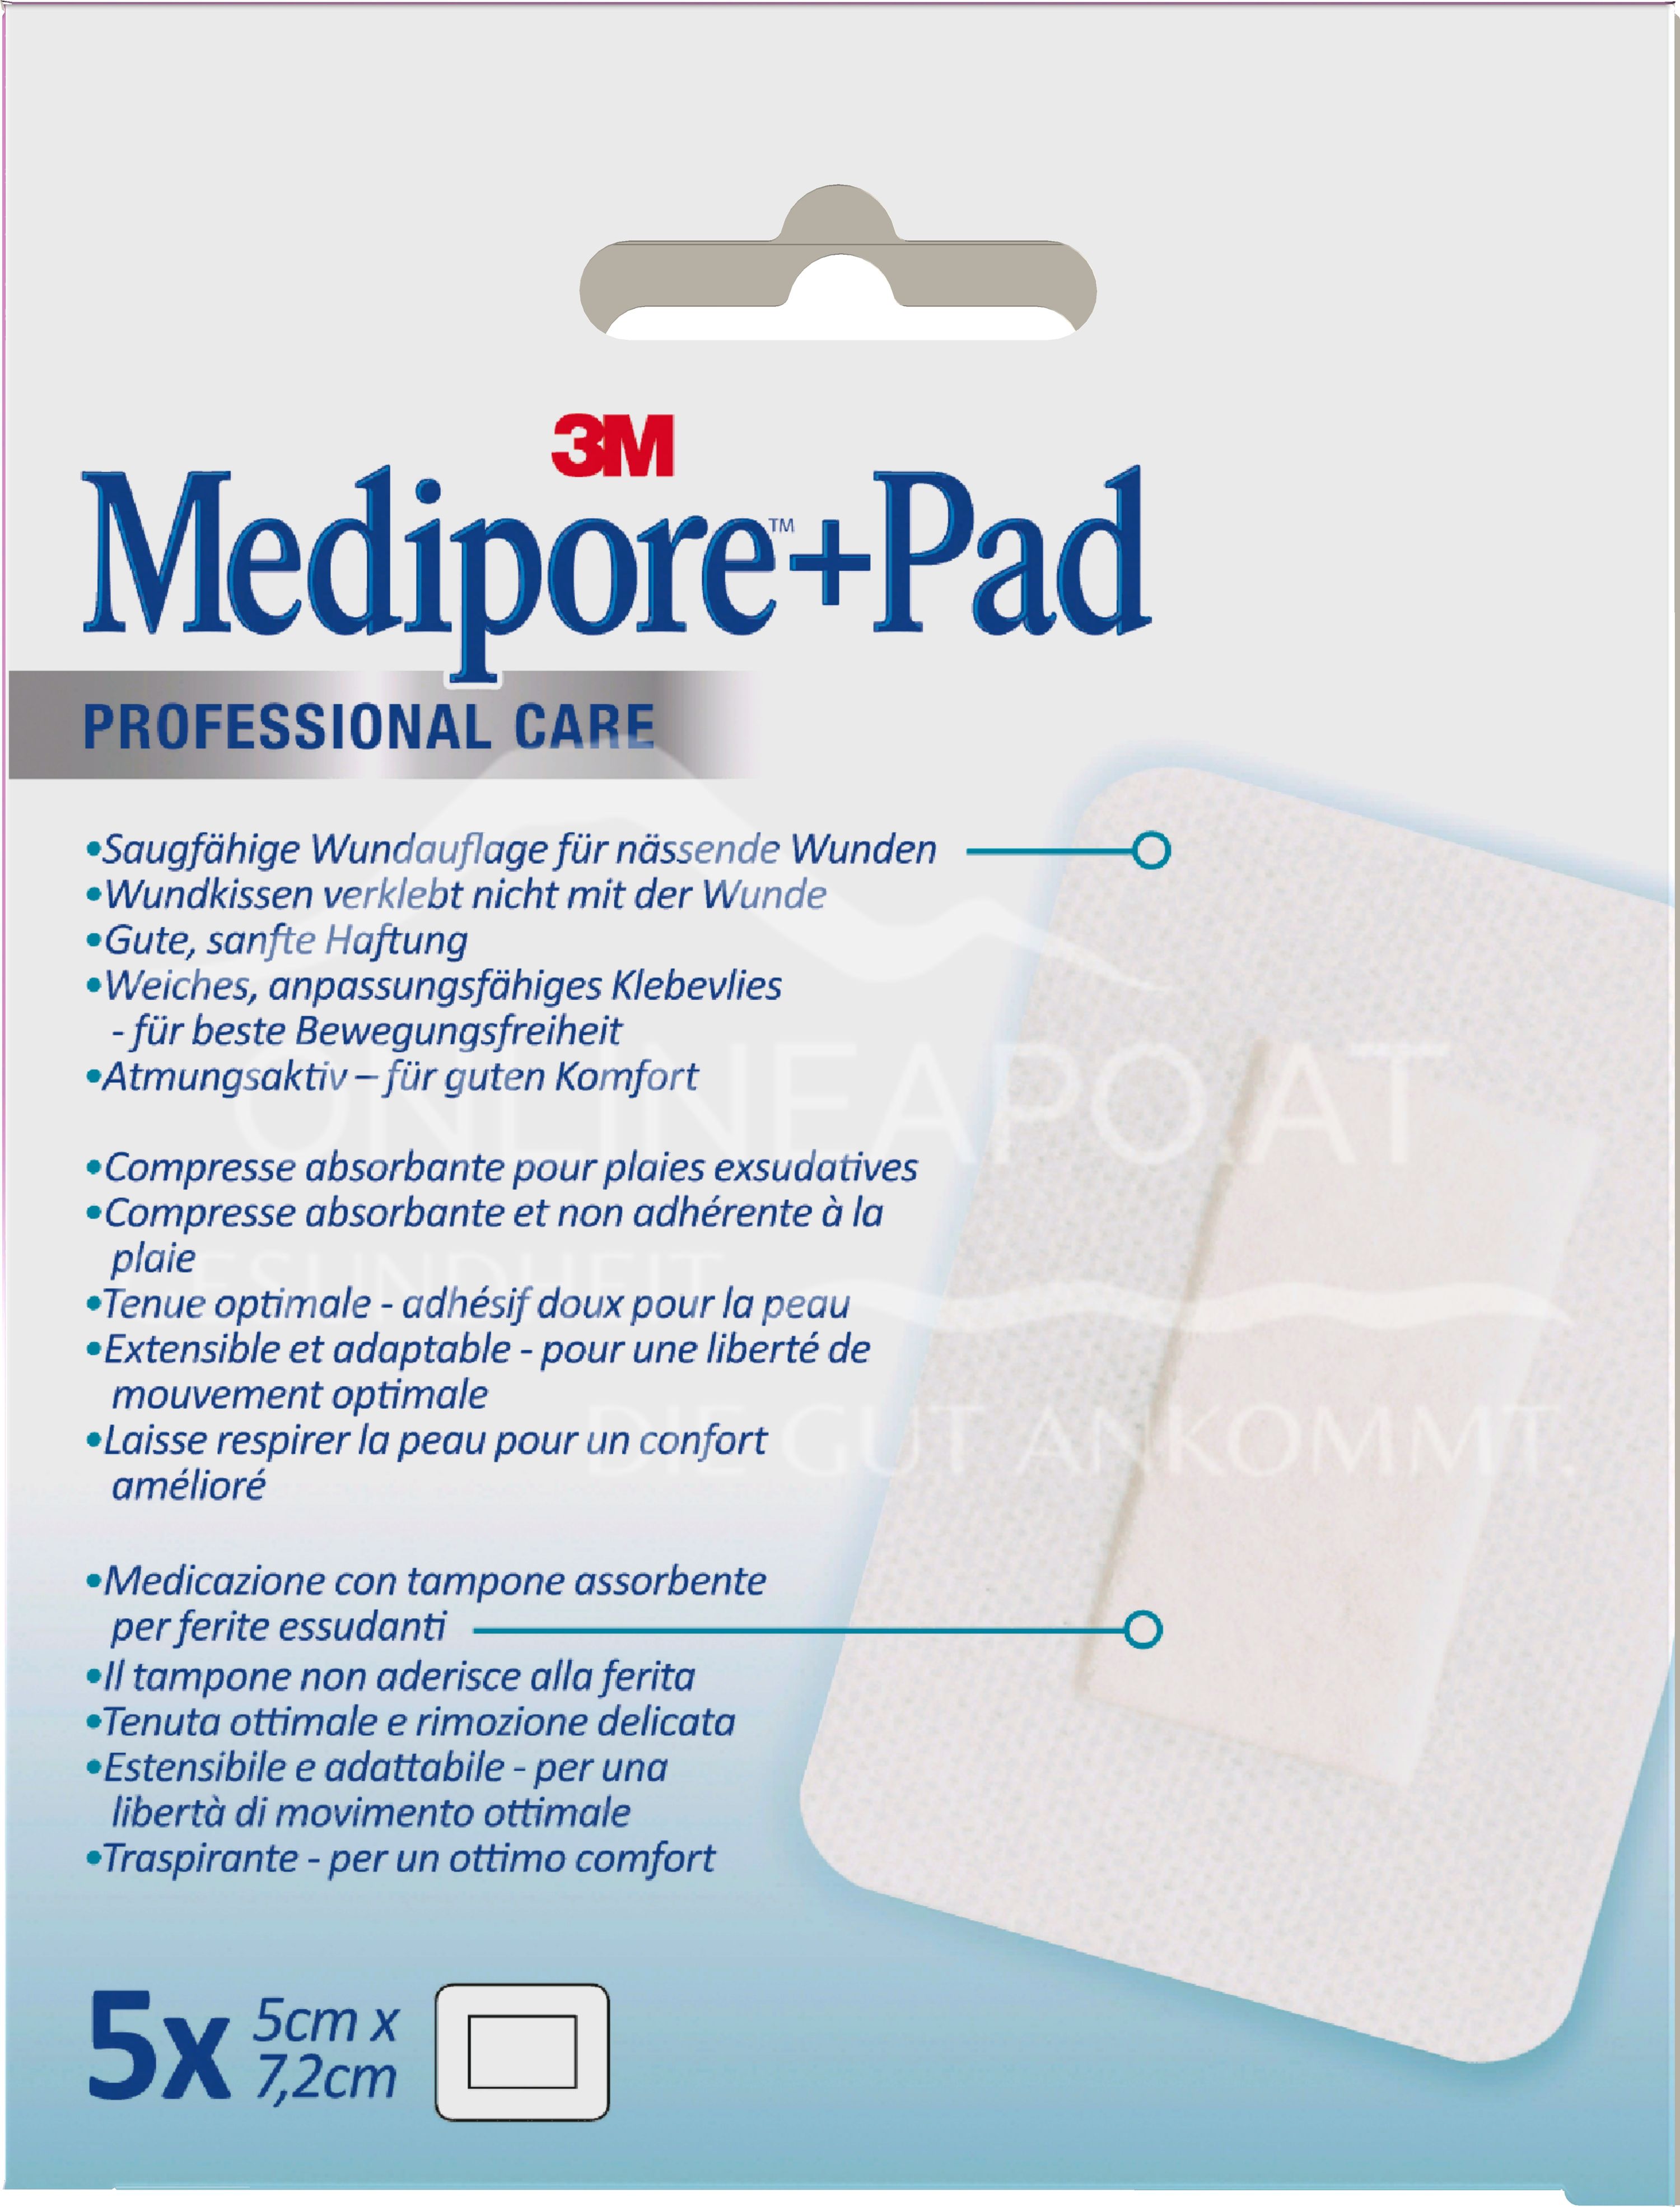 3M Medipore + Pad Steriler Wundverband mit Wundauflage,3562NP, 5 x 7,2 cm